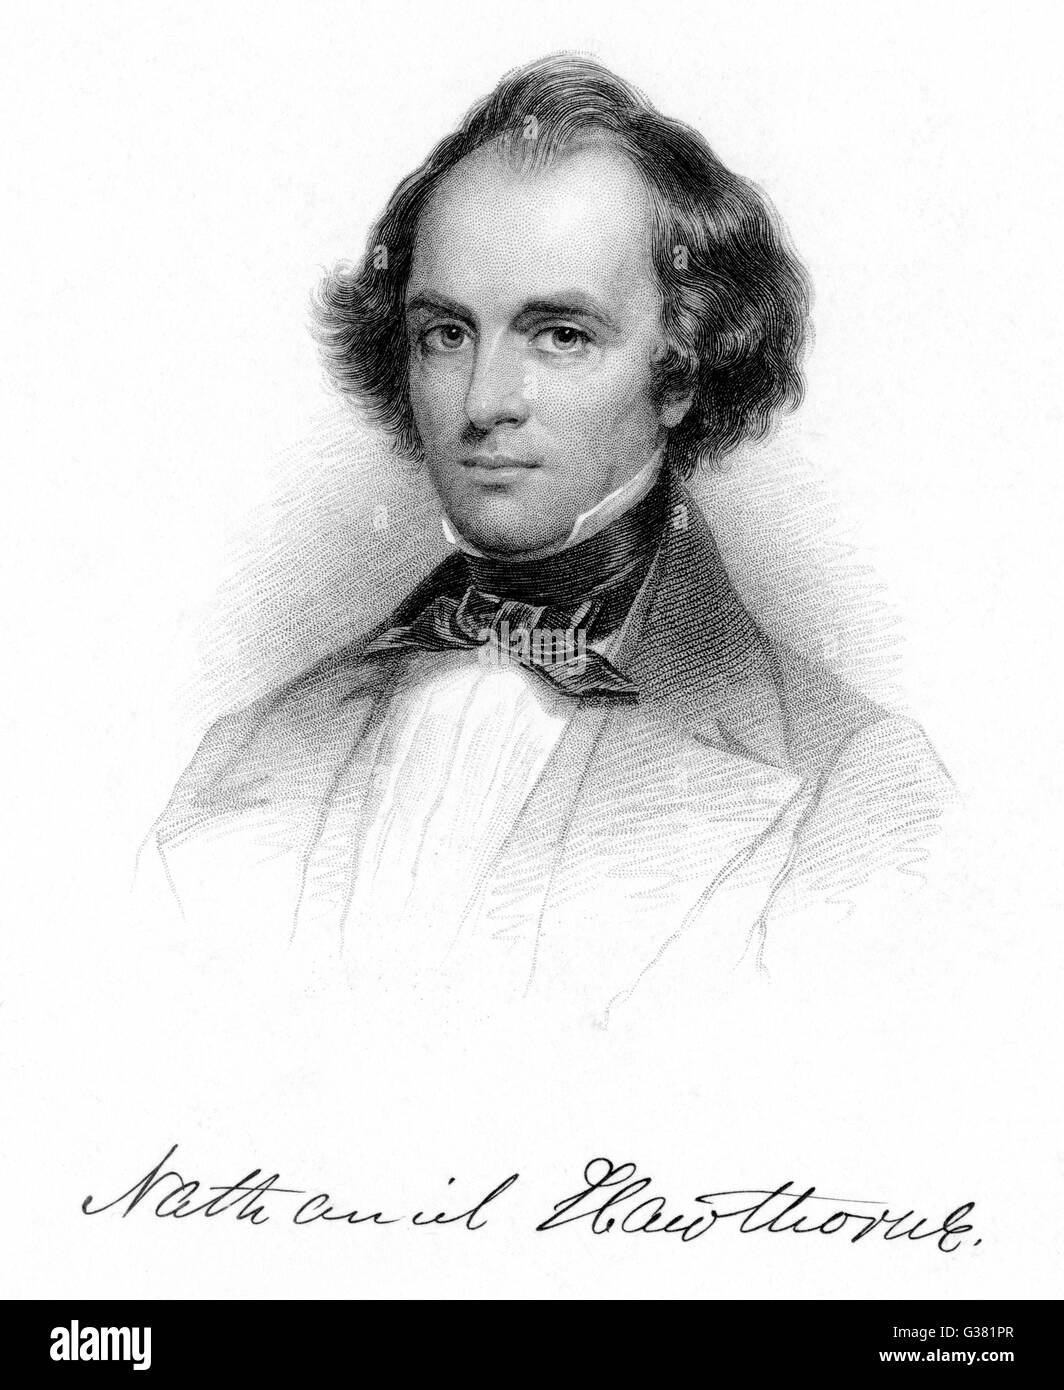 NATHANIEL HAWTHORNE (originalmente Hathorne) escritor americano Fecha: 1804 - 1864 Foto de stock